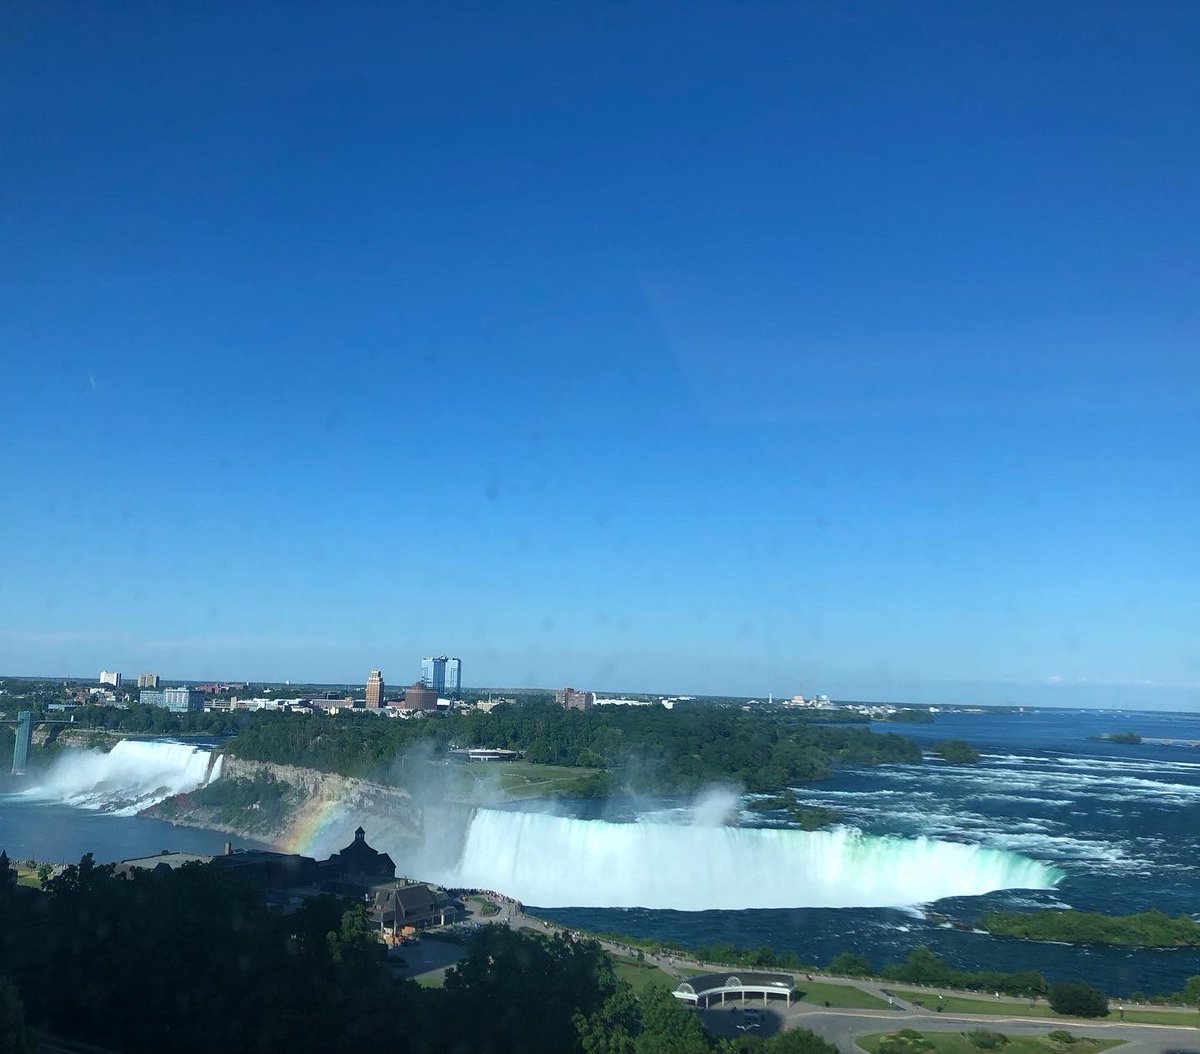 #TravelTueaday 2022. Niagara Falls - Canadian side.

#Travel #Photography #NiagaraFalls #Waterfall #USCanadaBorder